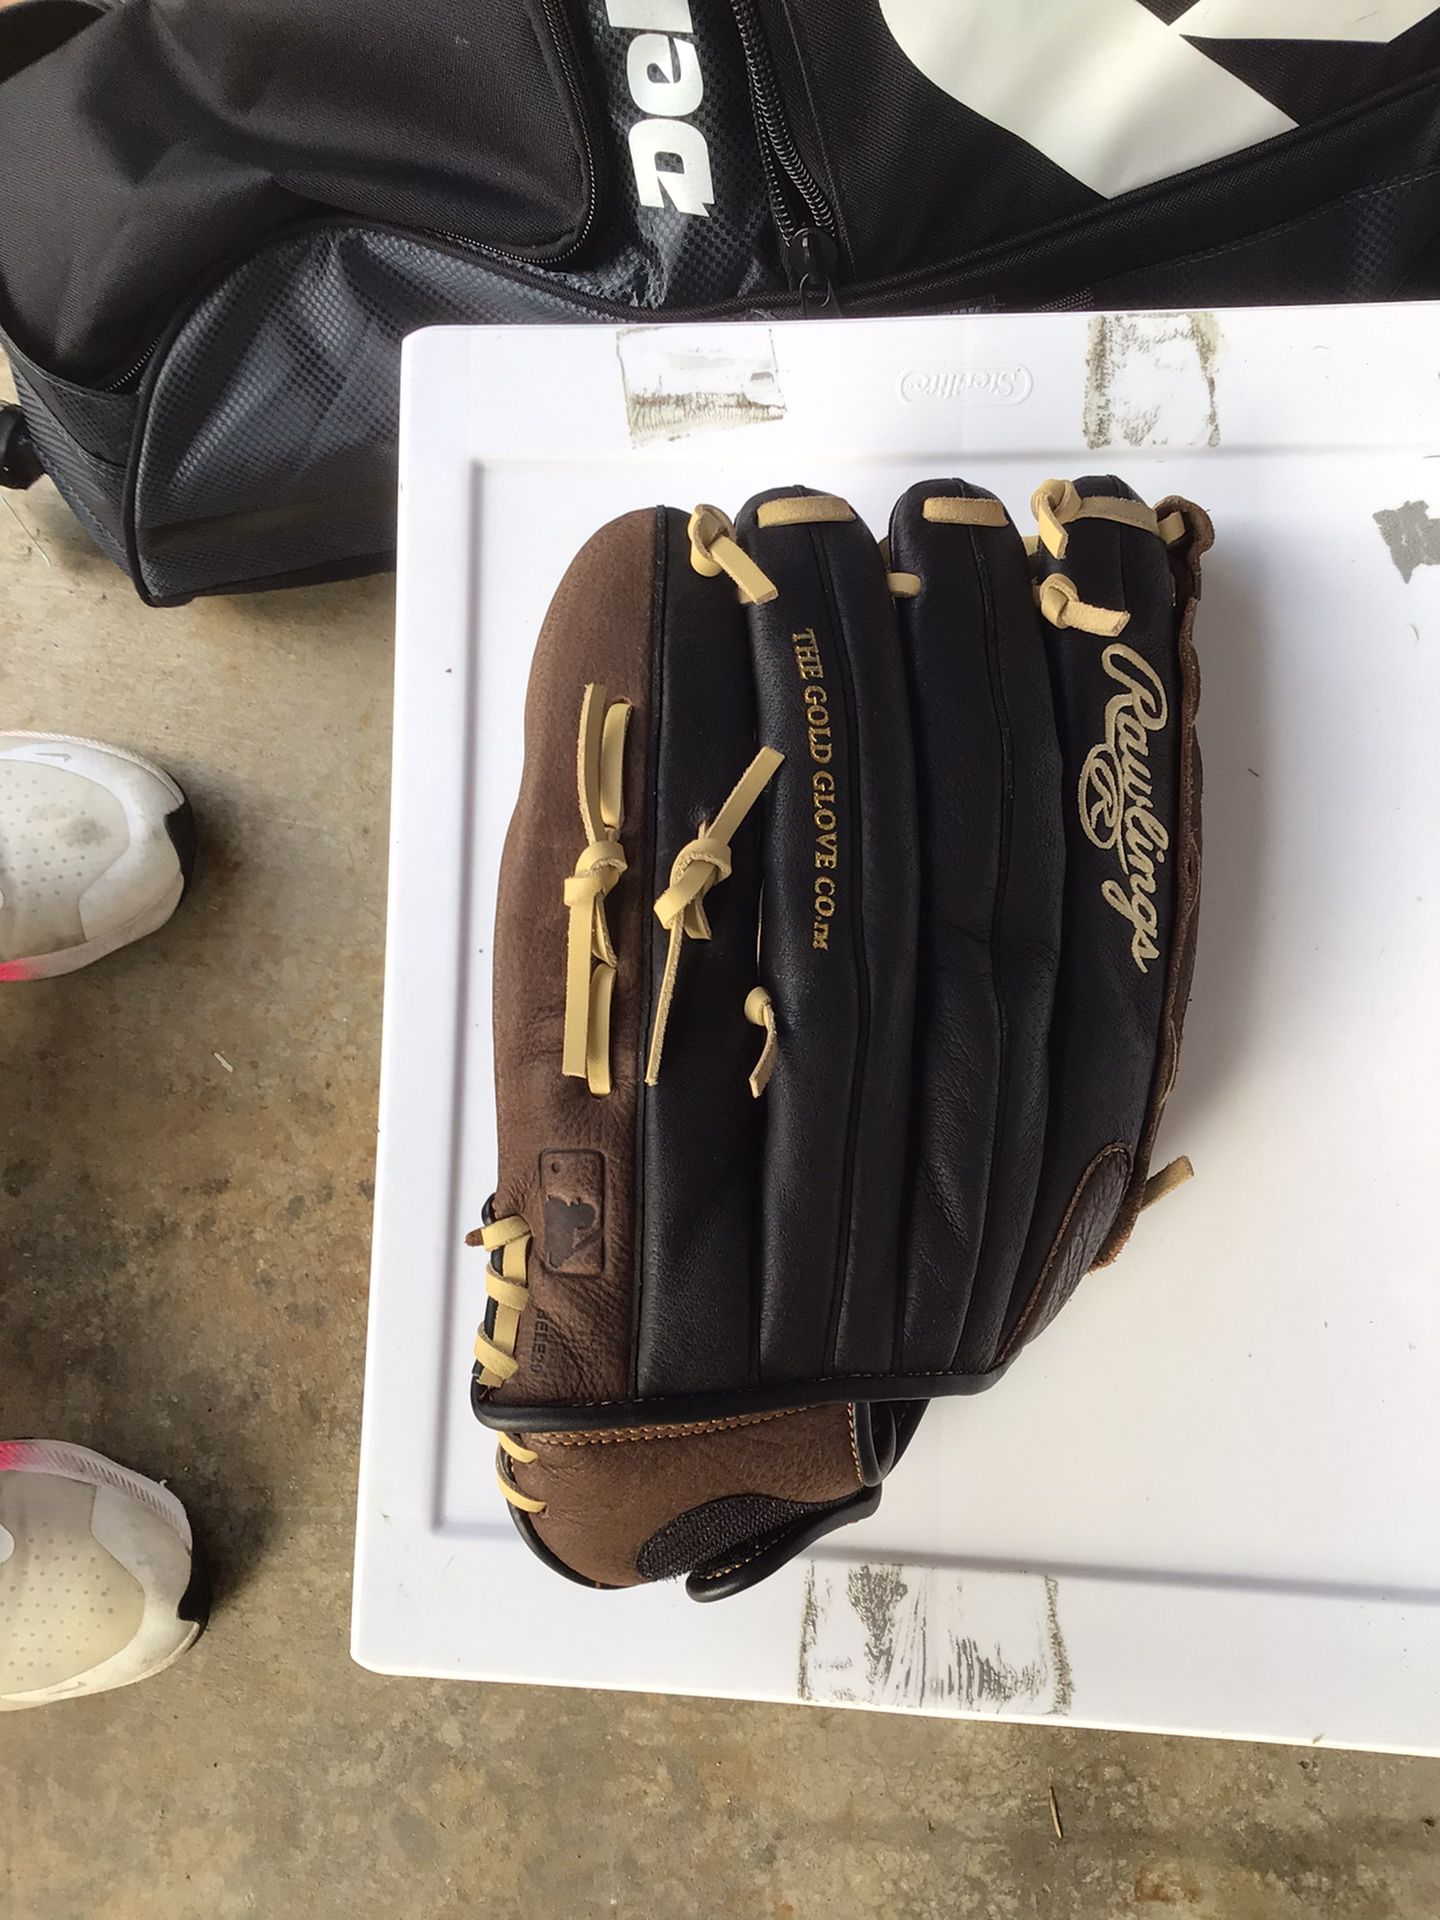 Rawlings 14 Inch Softball Glove